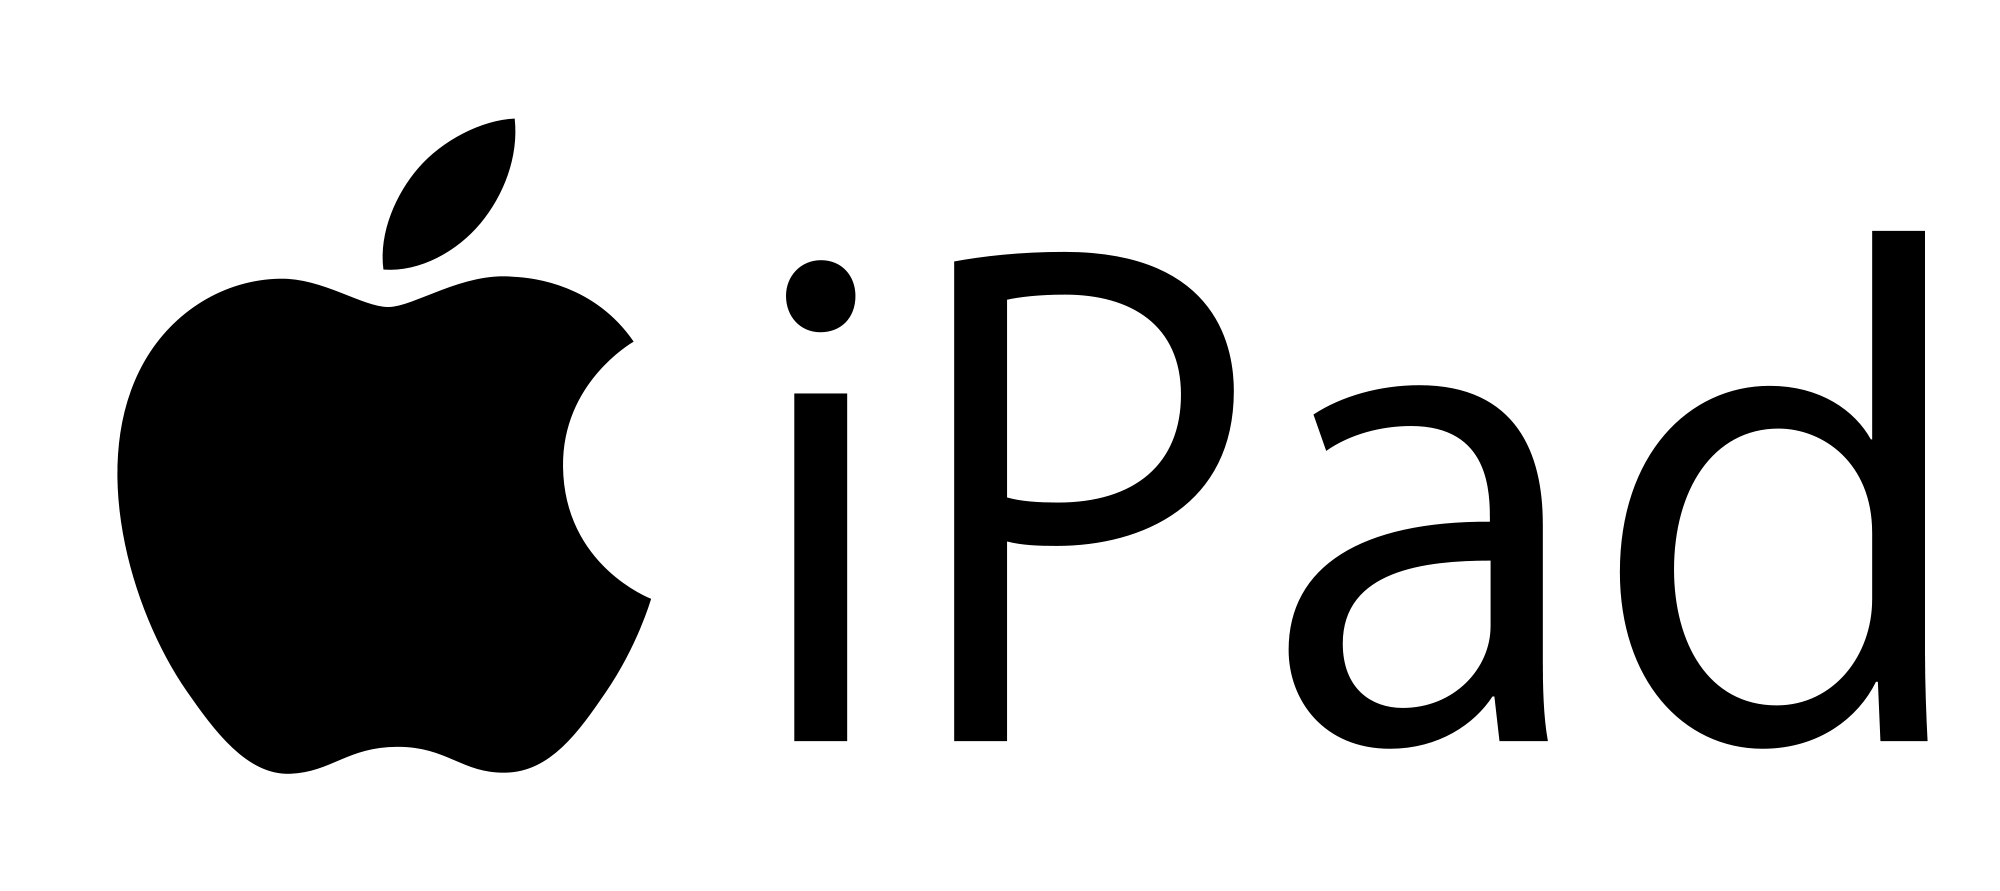 Apple iPad Logo - iPad Logo, iPad Symbol Meaning, History and Evolution